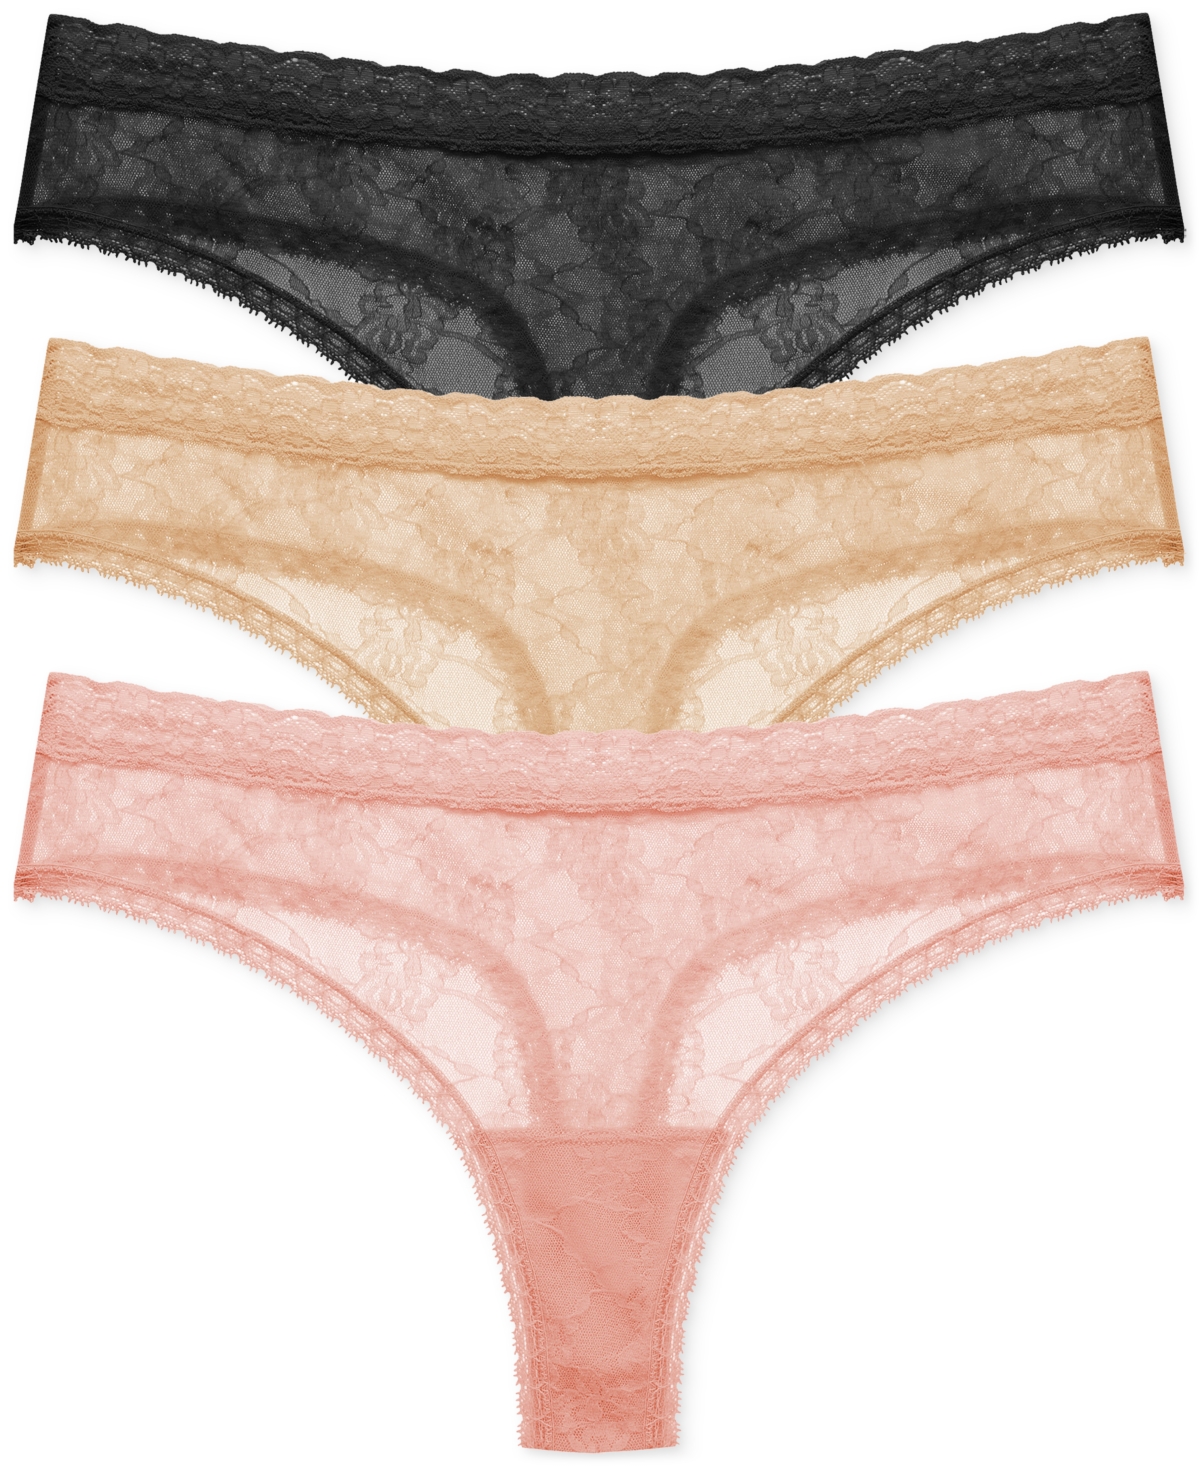 Natori Women's Bliss Allure 3-pk. Lace Thong Underwear 771303mp In Black,caf,rose Beige